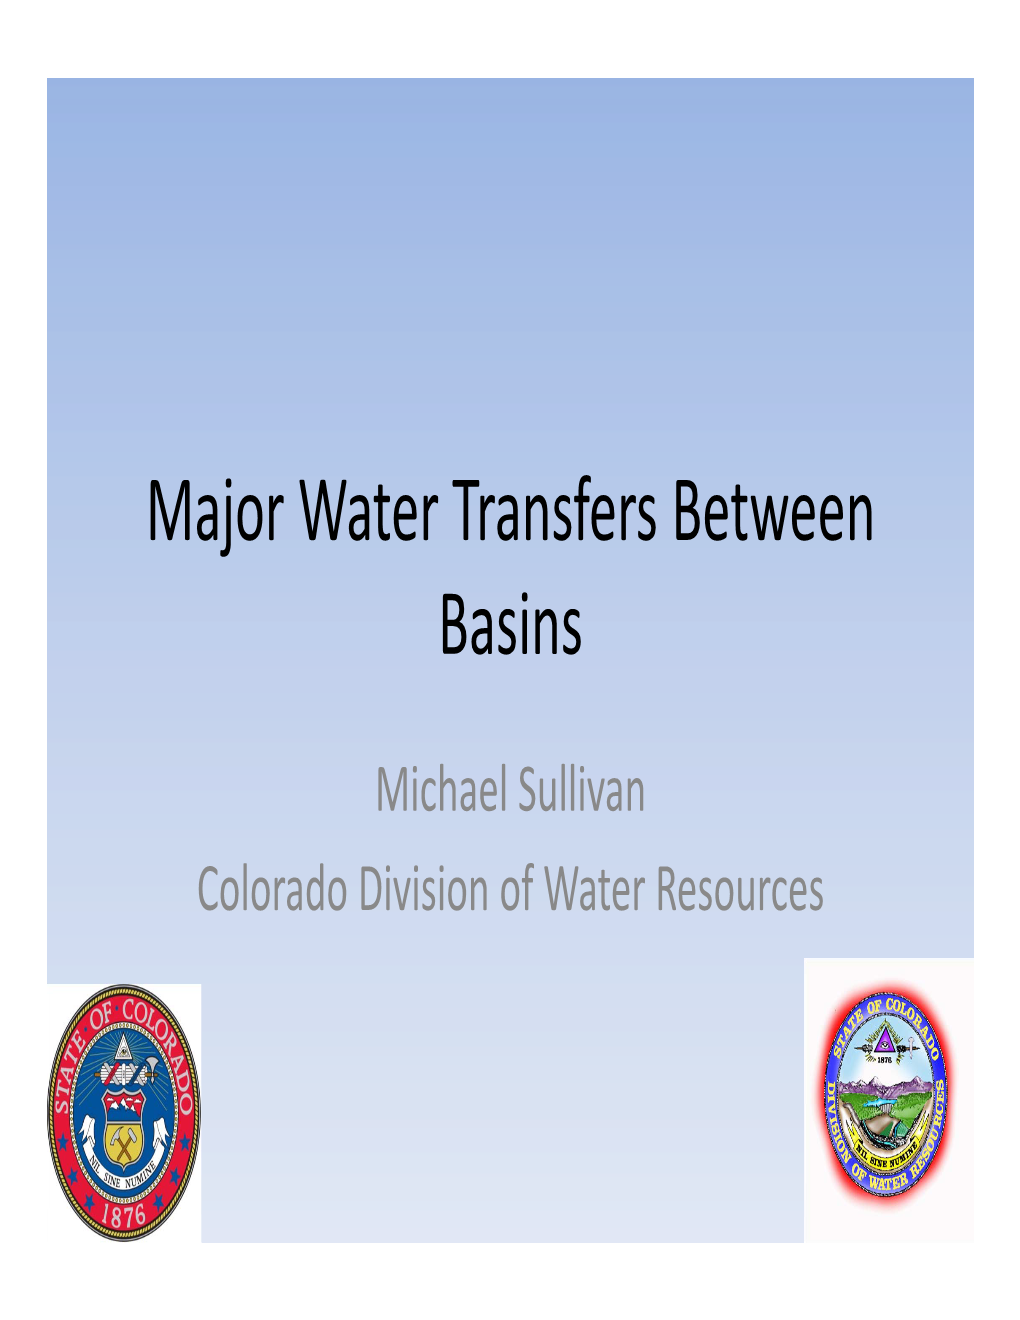 Major Water Transfers Between Basins